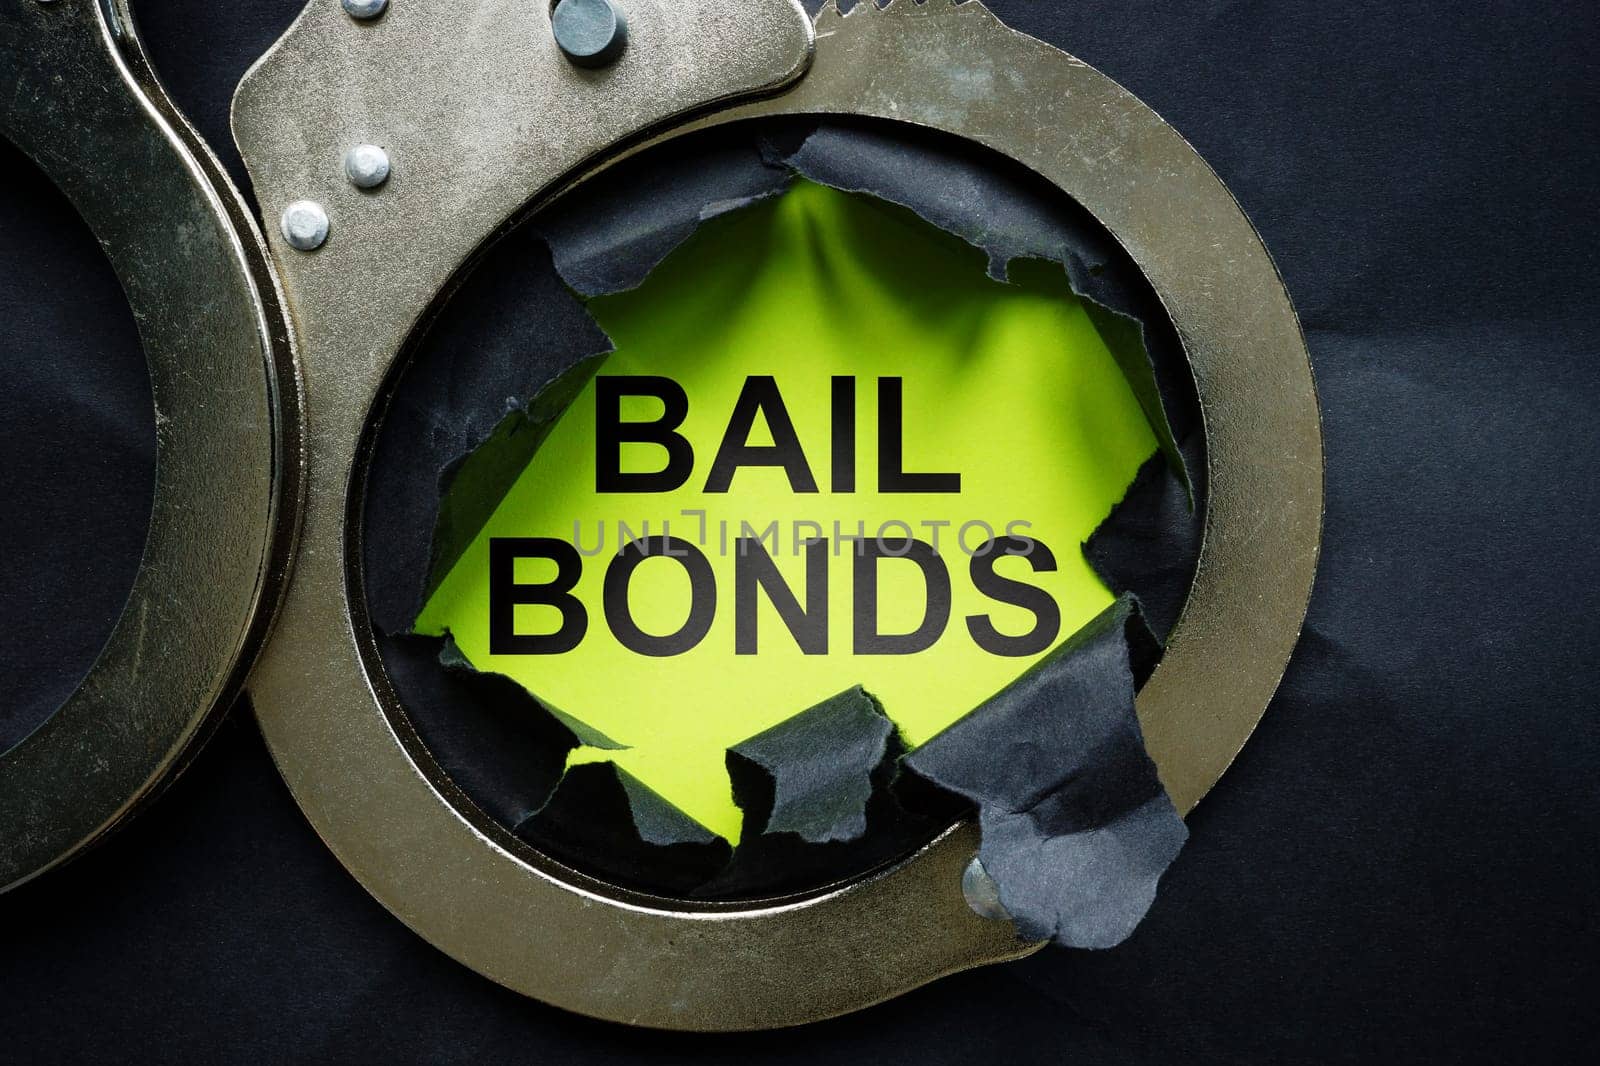 Bail bonds inscription and handcuffs. by designer491